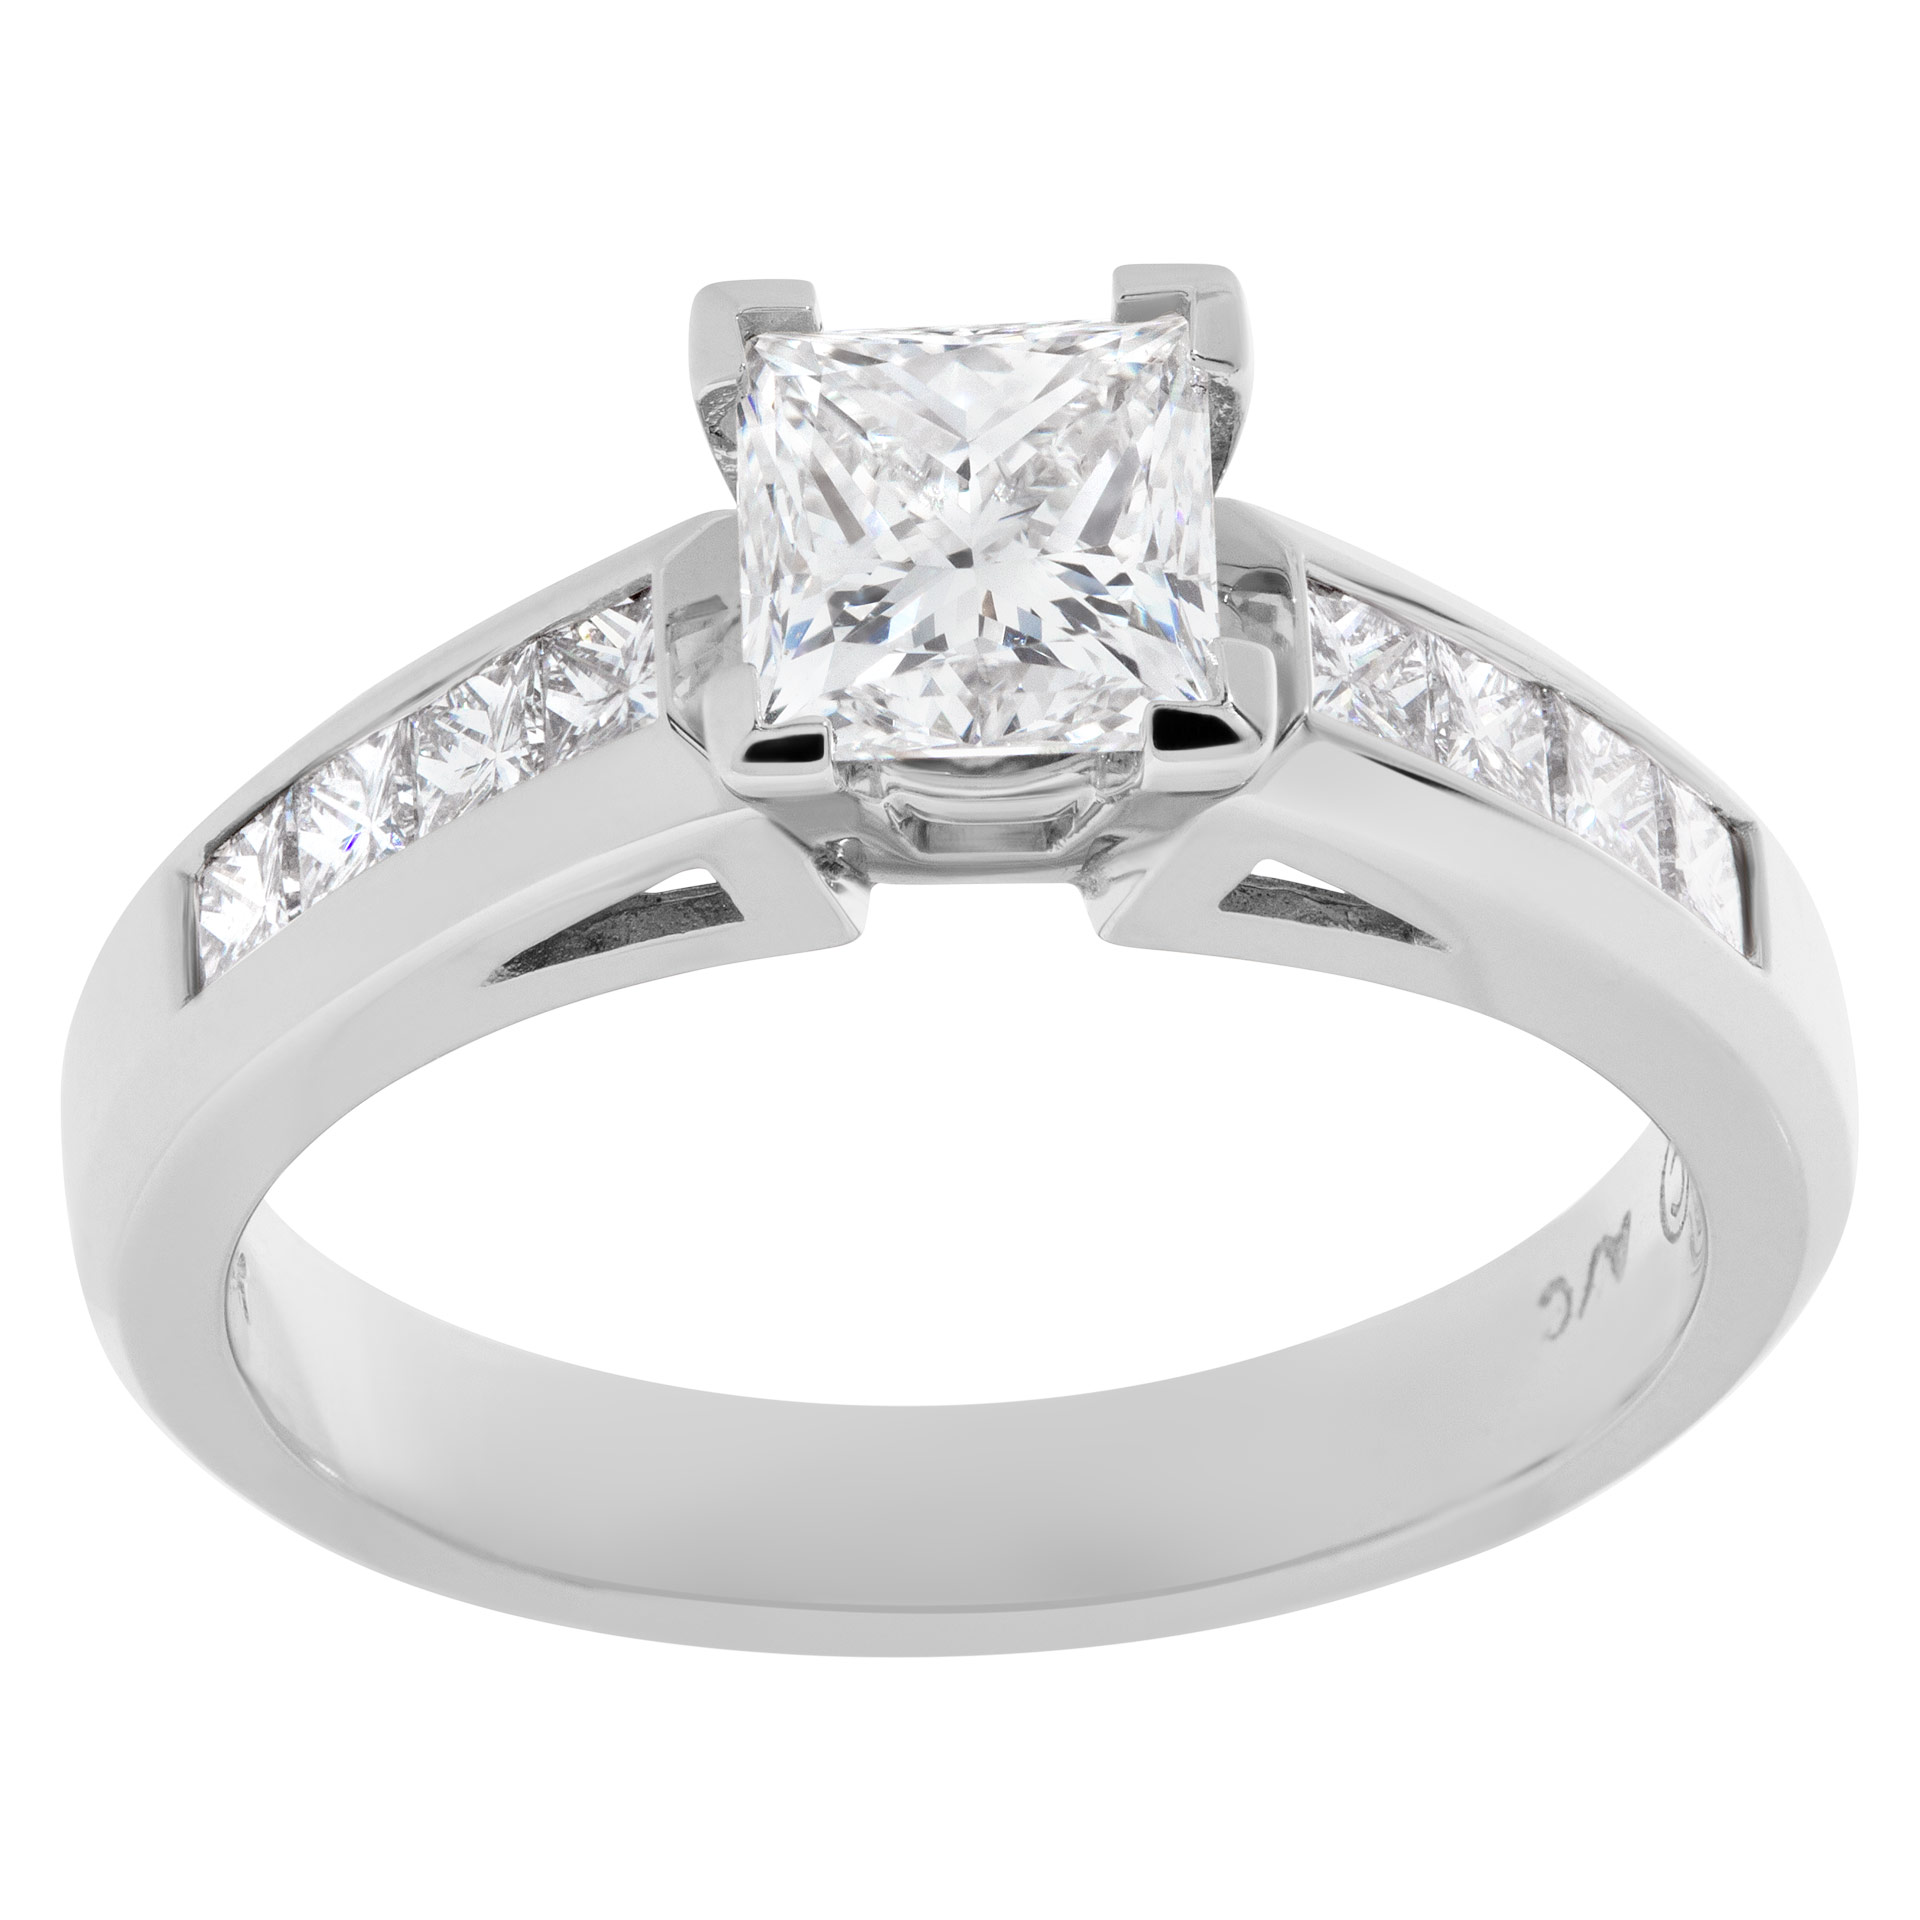 GIA certified square modified brilliant cut diamond 1.01 carat (F color, VS2 clarity) ring image 1